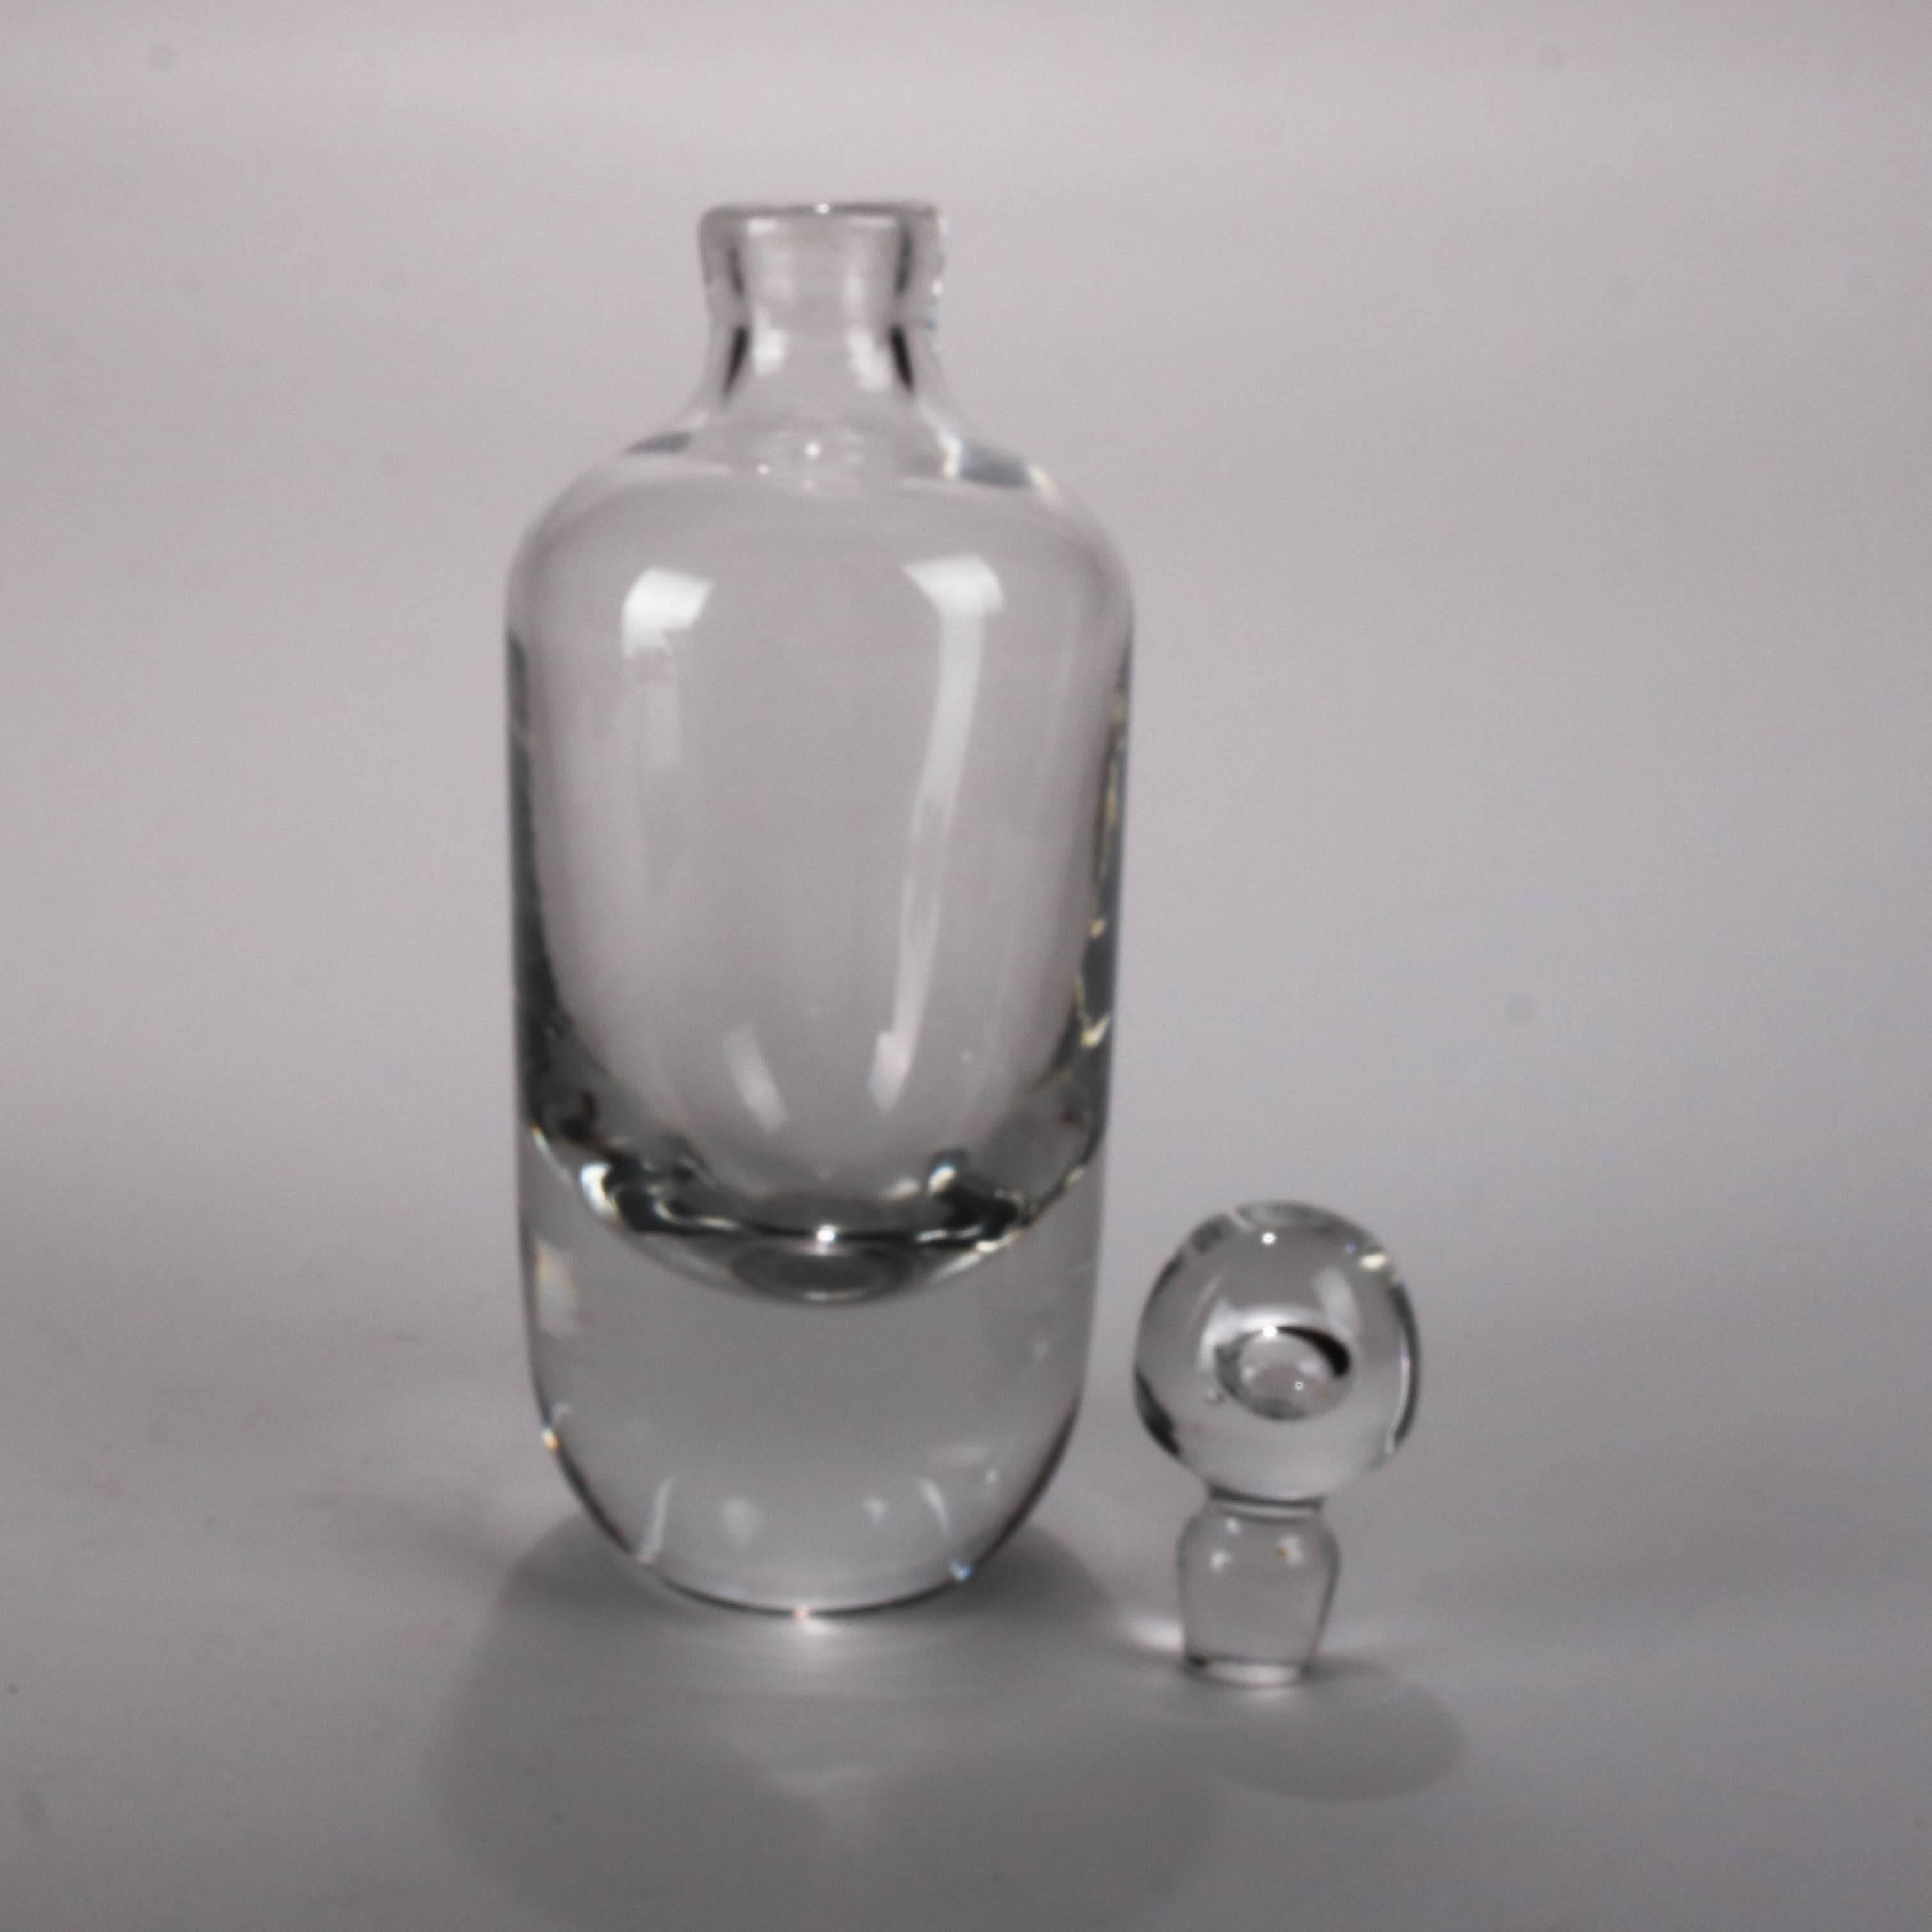 Vintage Steuben school handblown crystal decanter with stopper


Measures: 11" H, 3.75" diam.